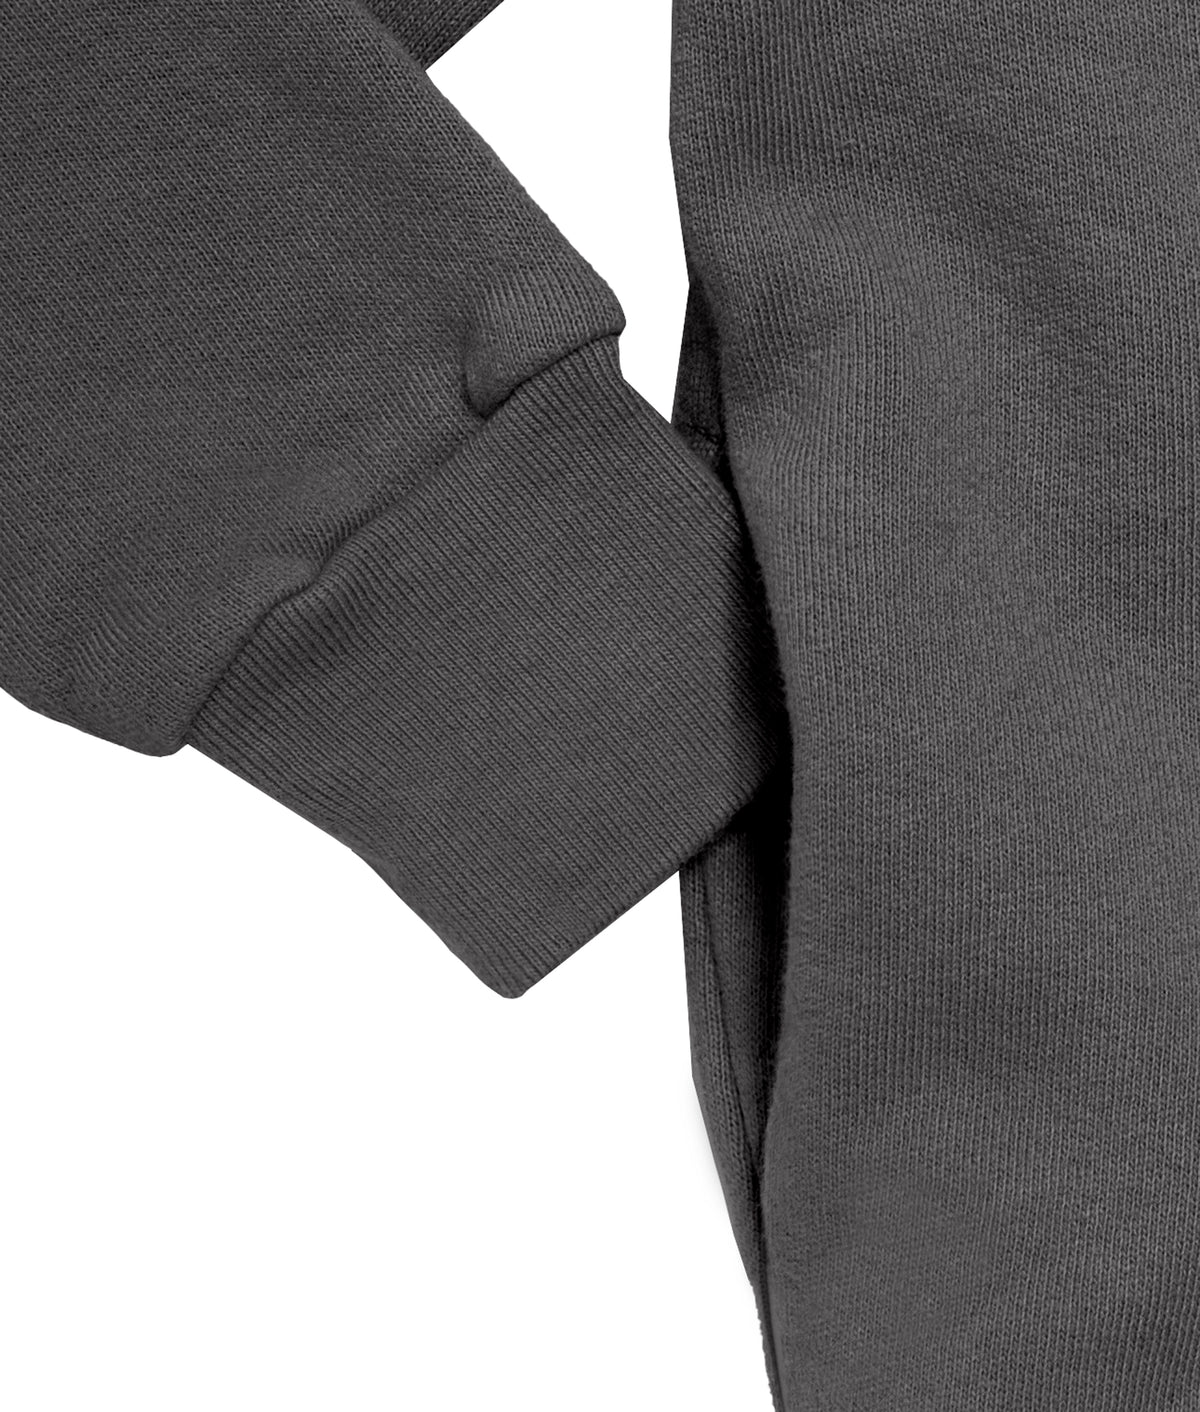 Soft &amp; Cozy 100% Cotton Fleece Zip Hoodie with Inner Pockets | Charcoal